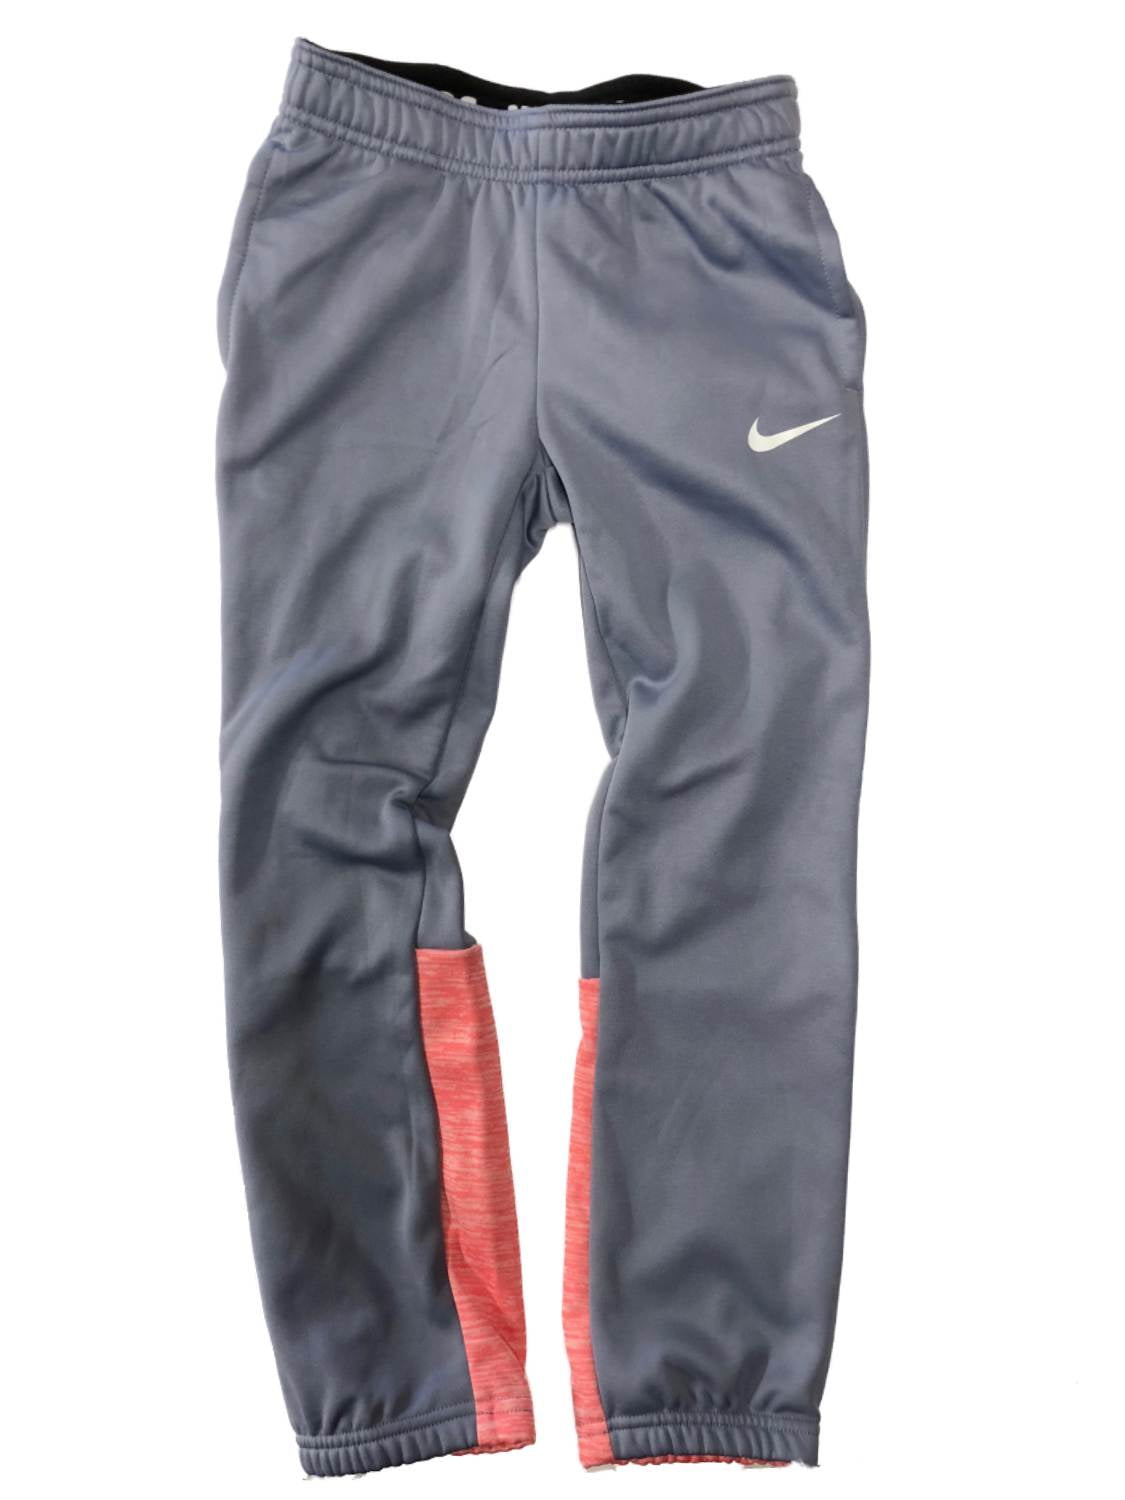 Nike Track Pants 1067 - Ragstock.com